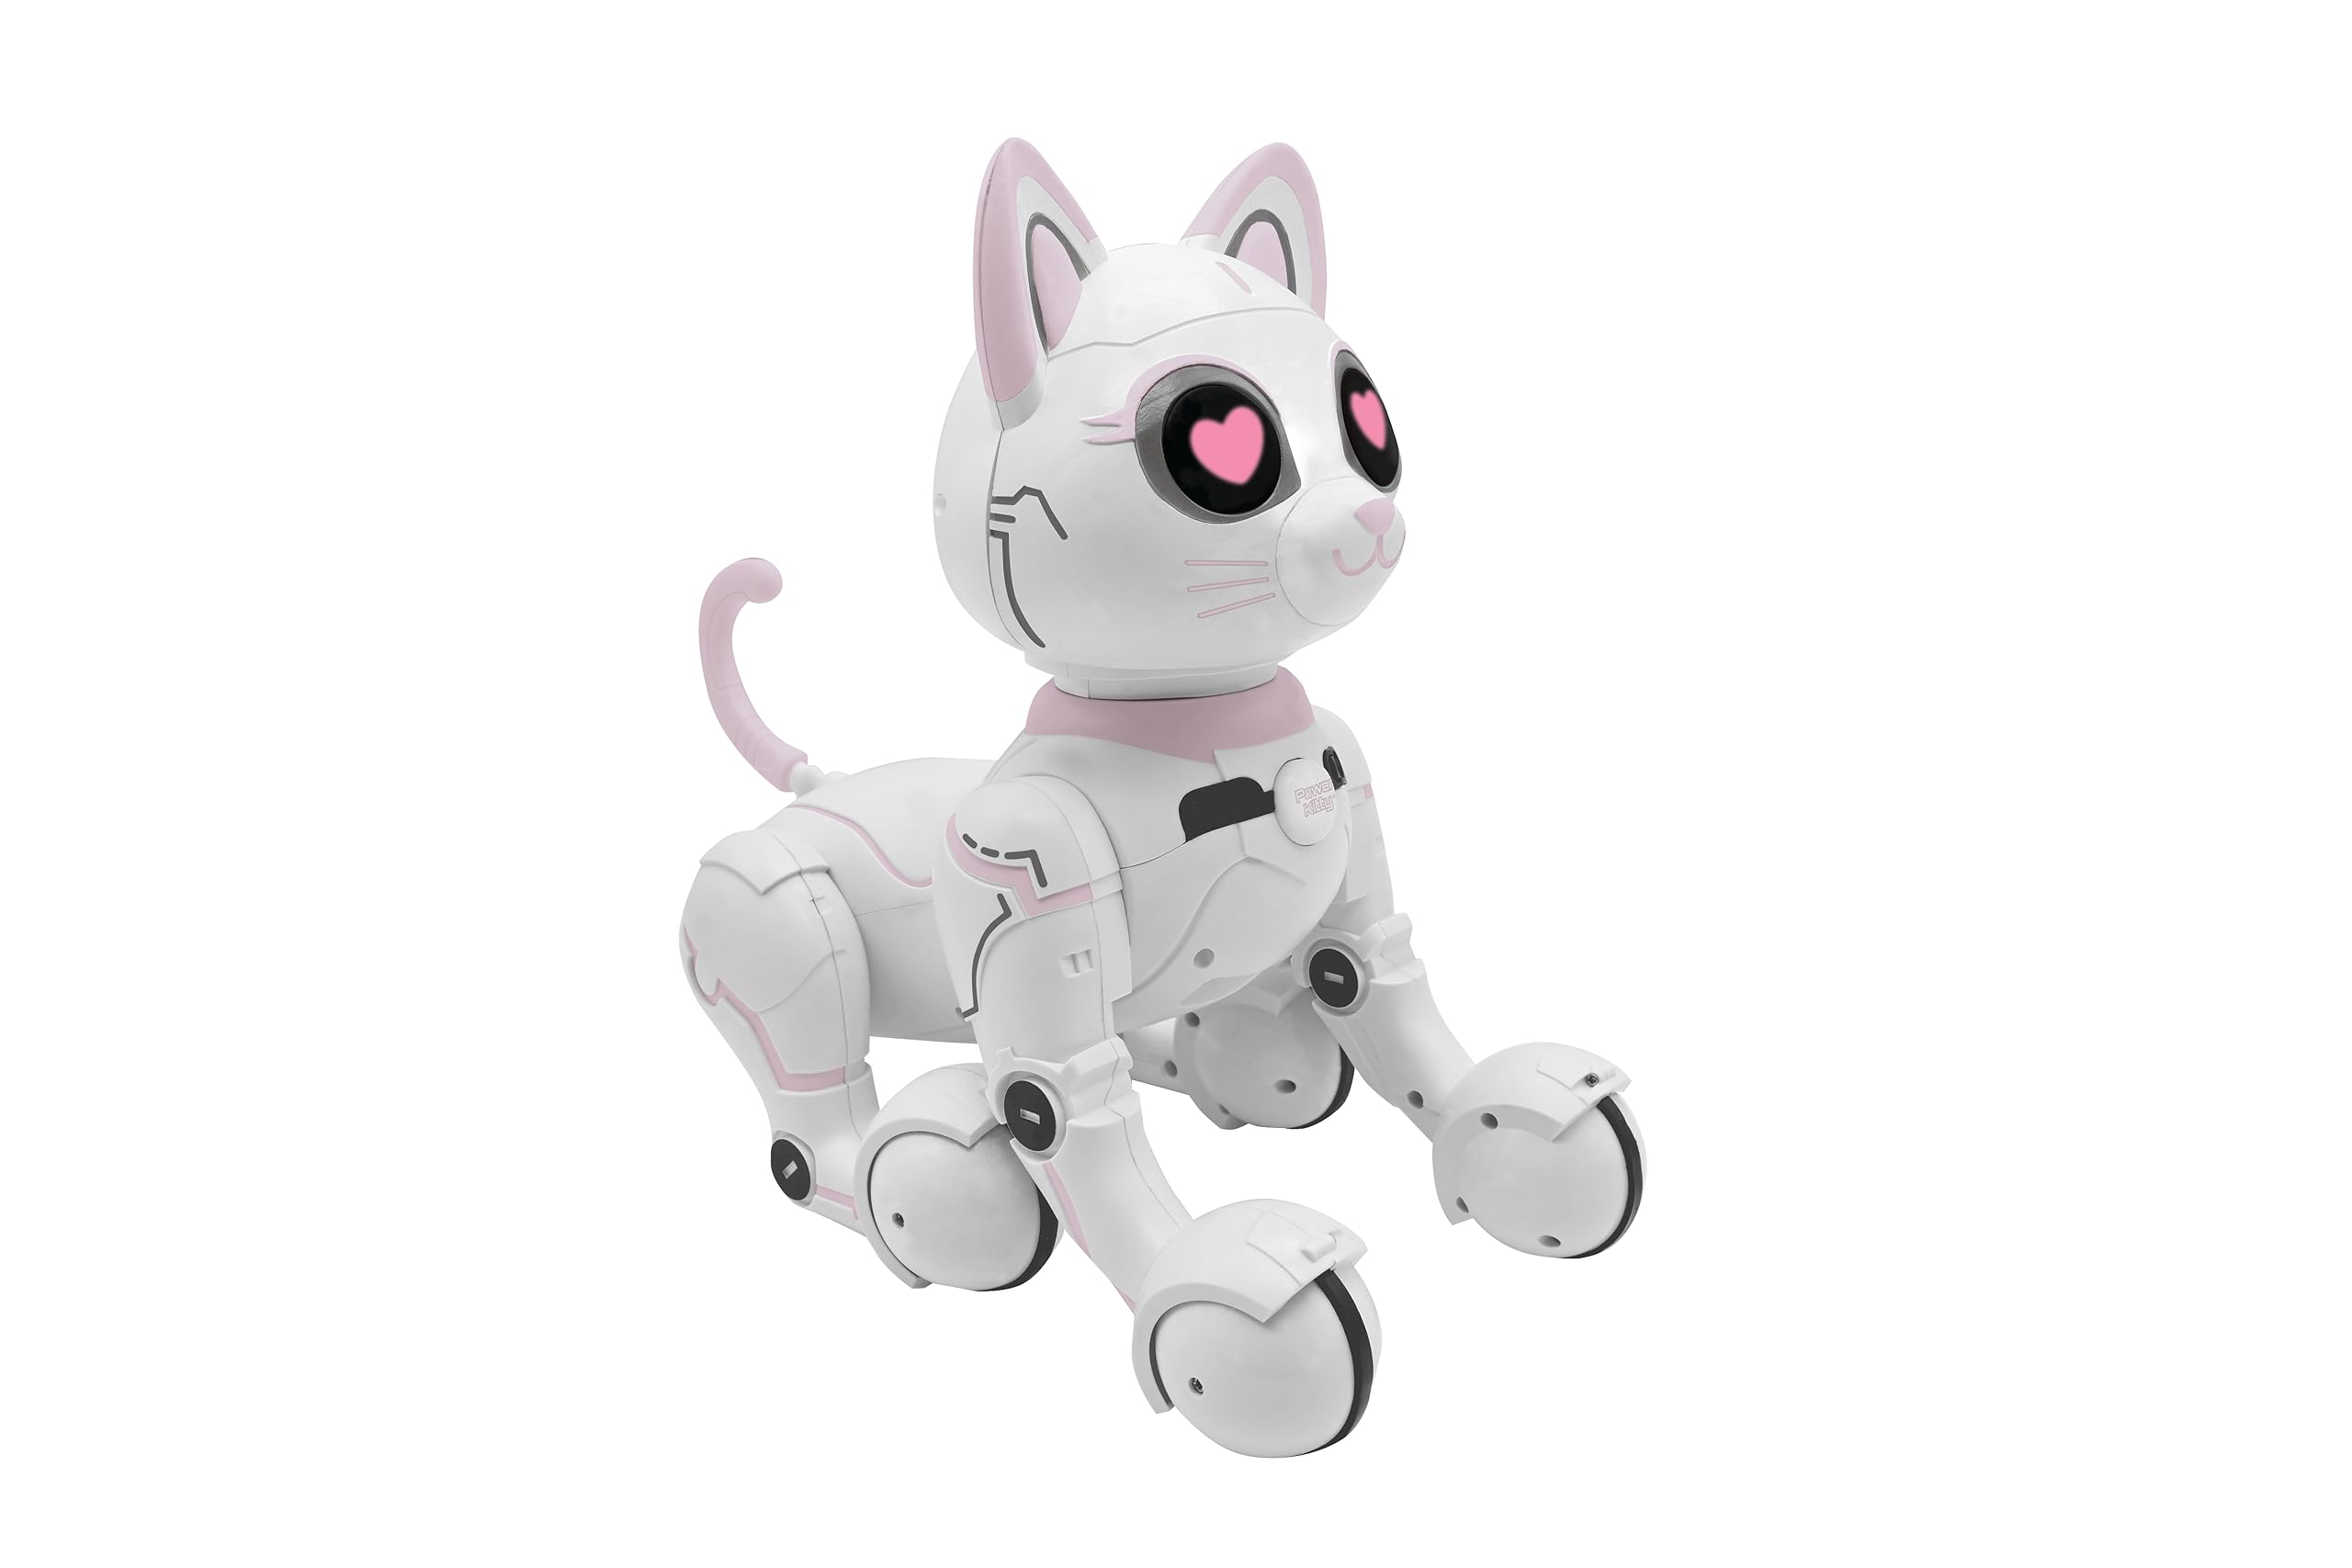 LEXiBOOK - Power Kitty® - Remote Control Robot Cat, Programmable Smart Robot, Light, Sound, White/Pink - KITTY01